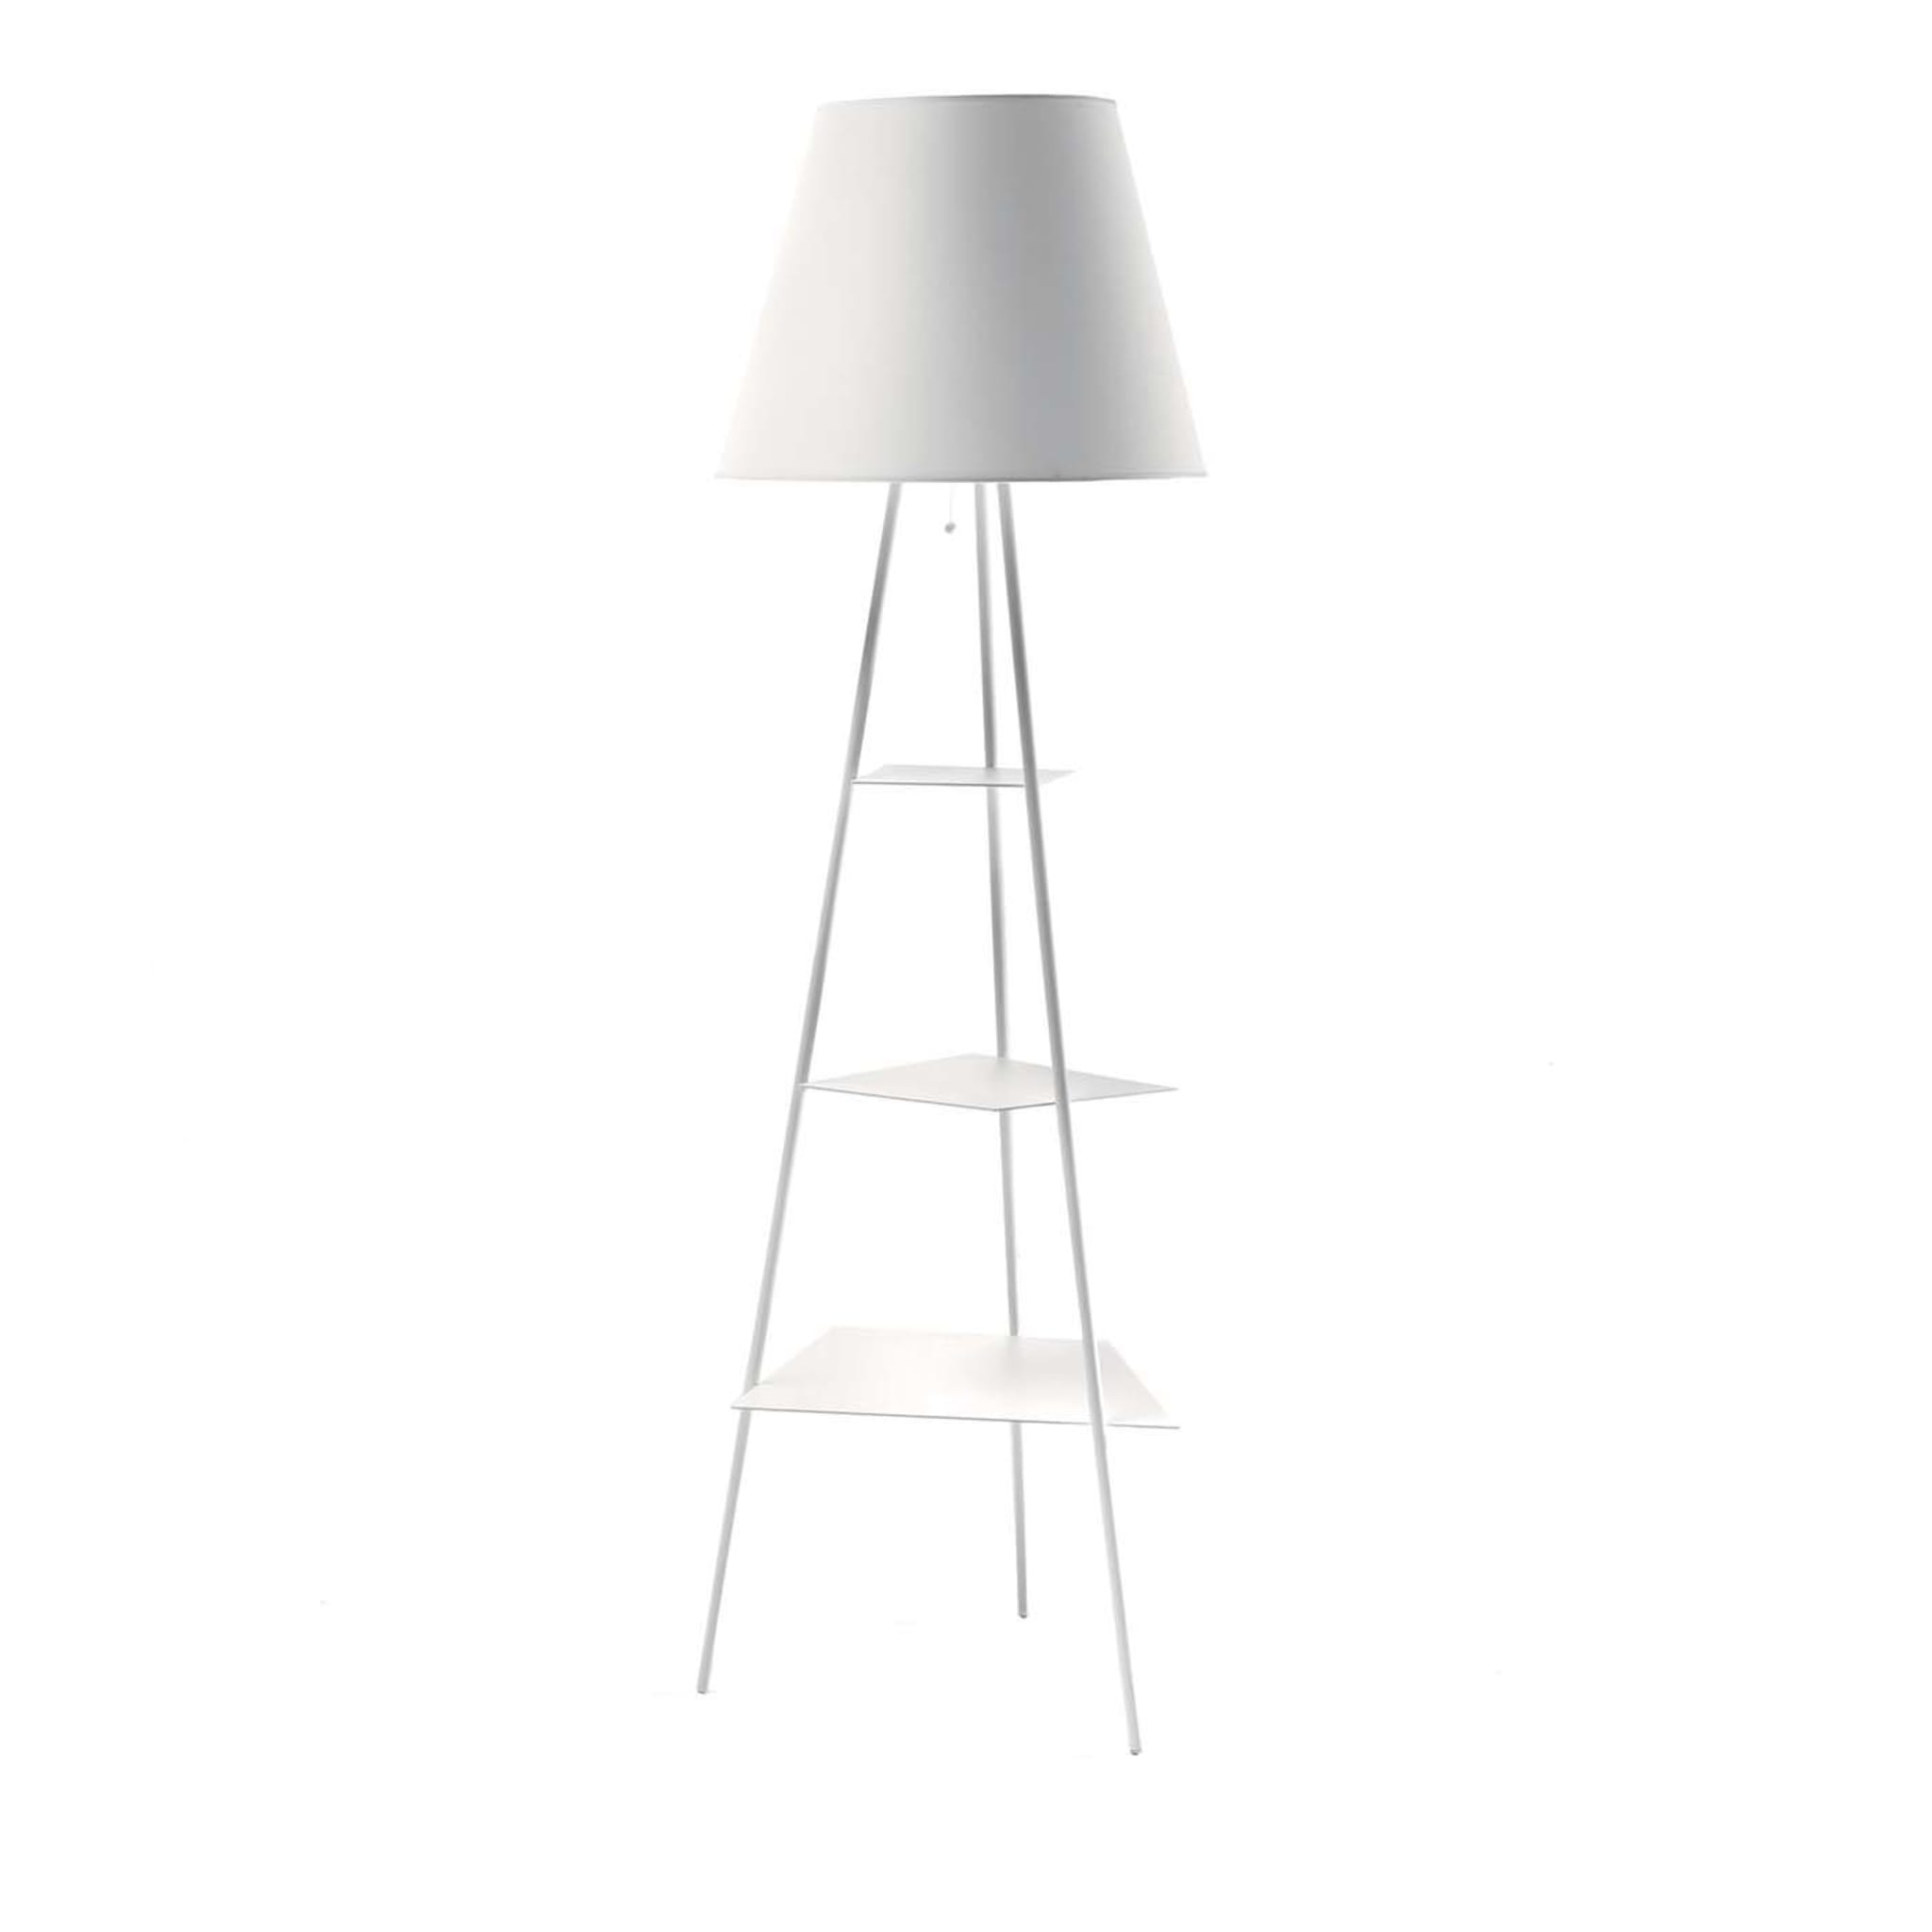 TRI.BE.CA White Floor Lamp by Marzia and Leonardo Dainelli - Main view